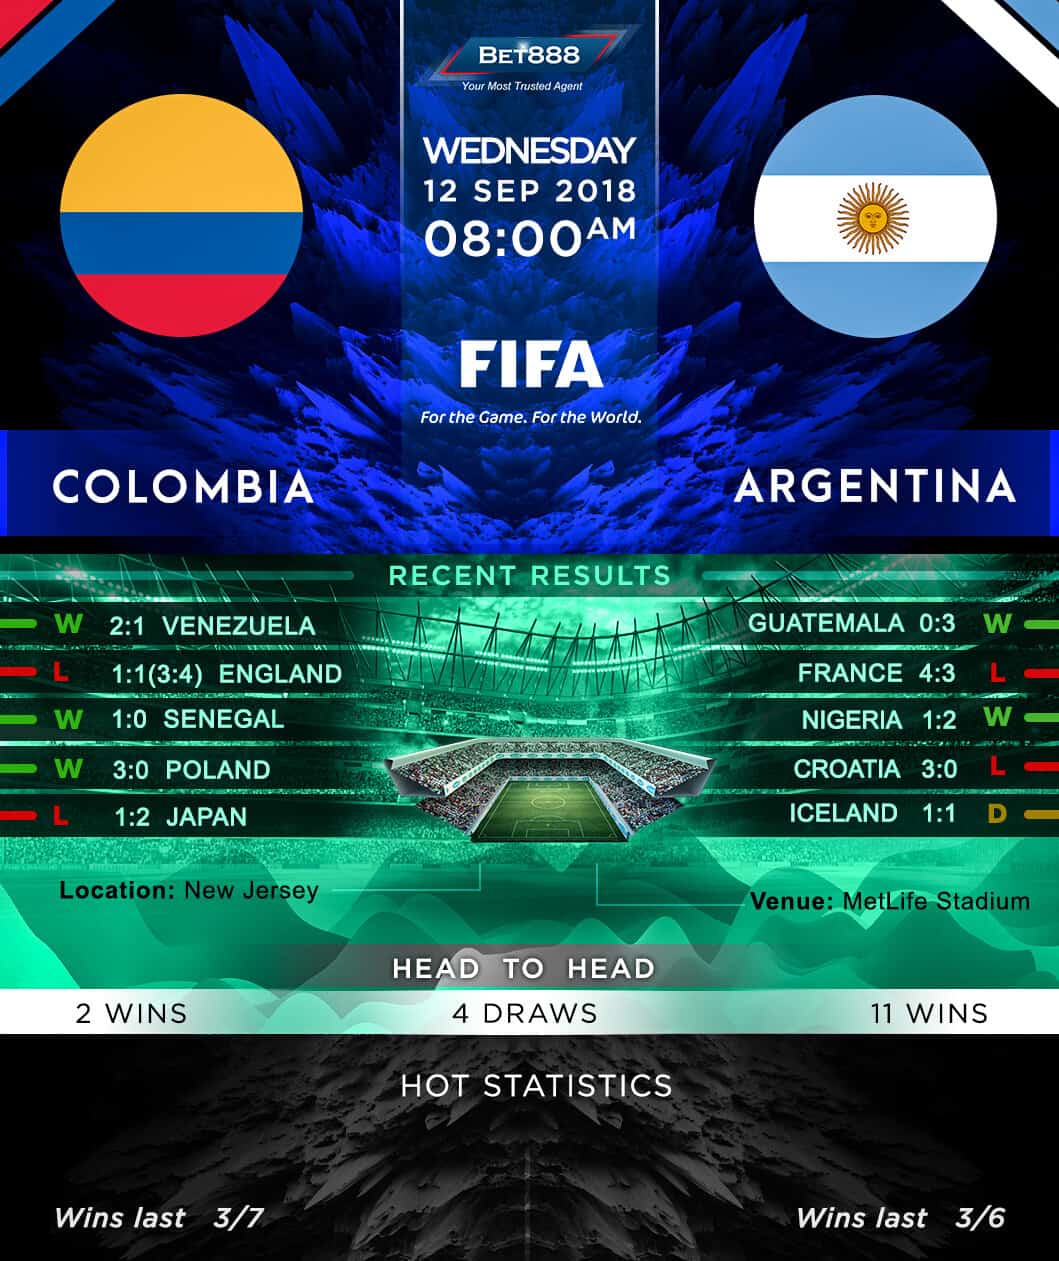 Colombia vs Argentina 12/09/18